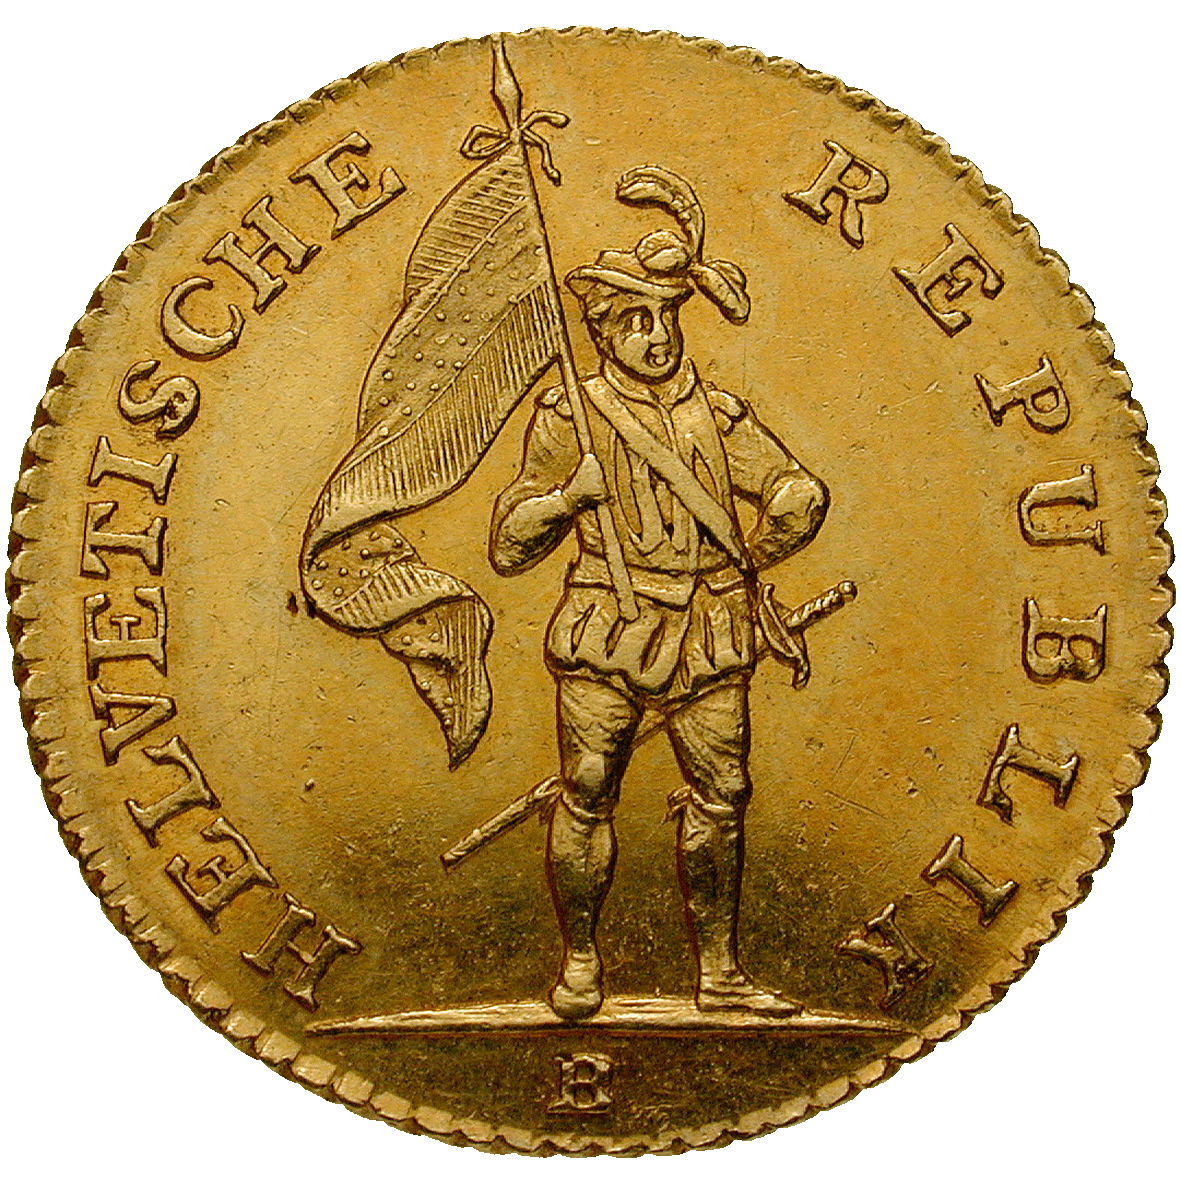 Helvetic Republic, 16 Francs 1800 (obverse)